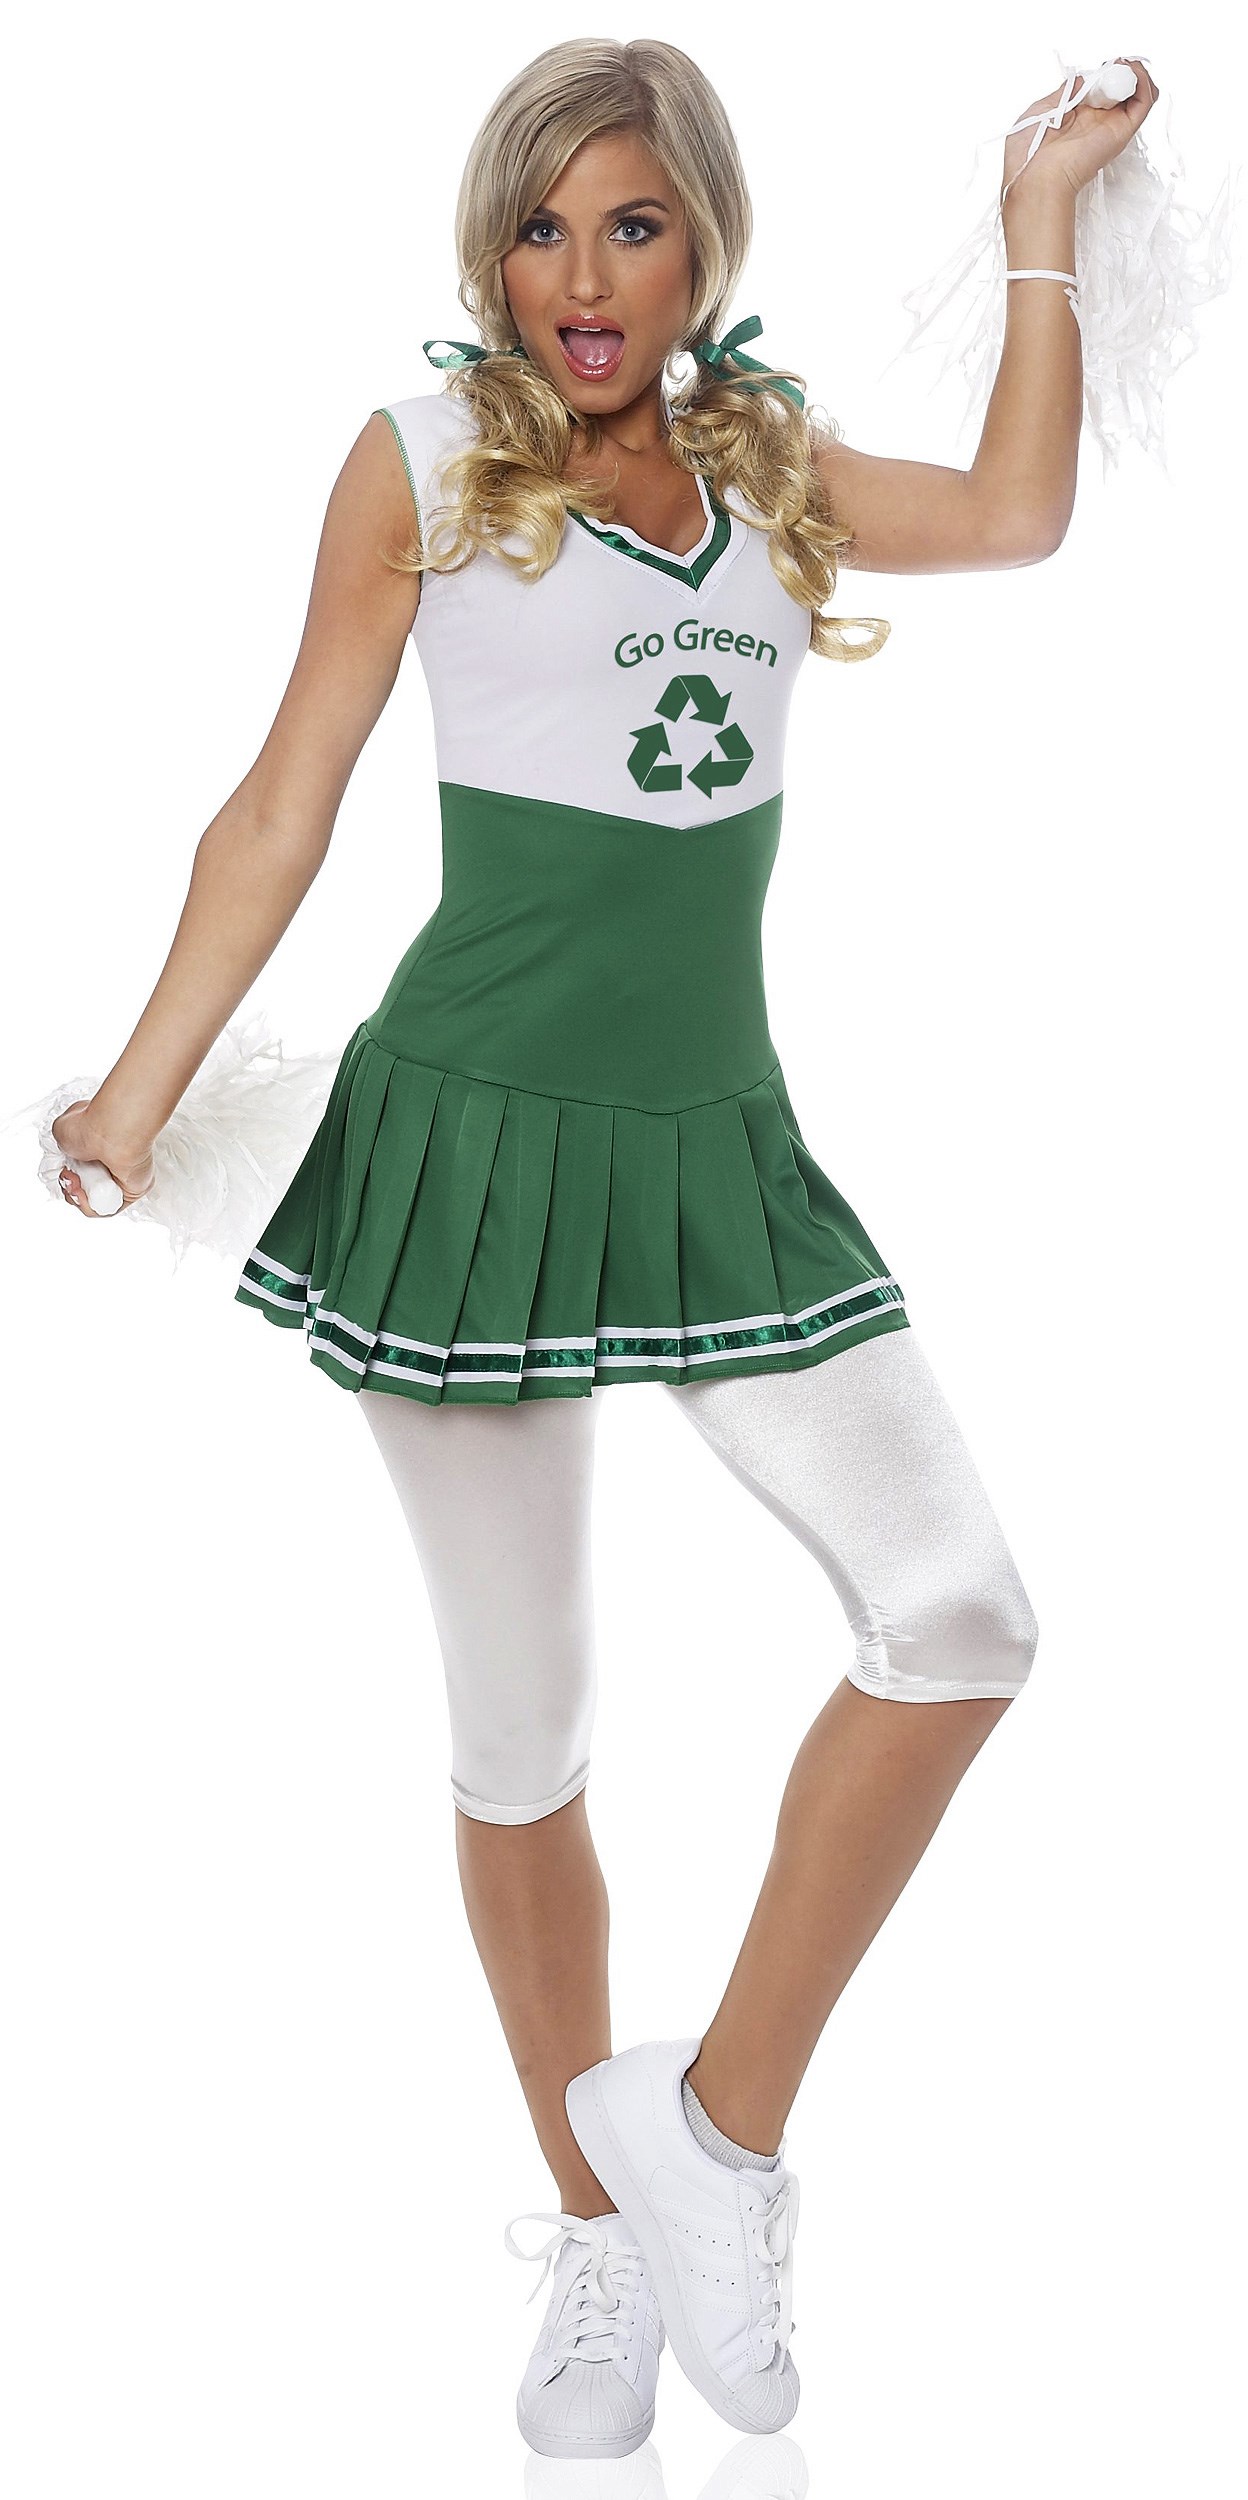 Go Green Cheeleader Costume Uniform